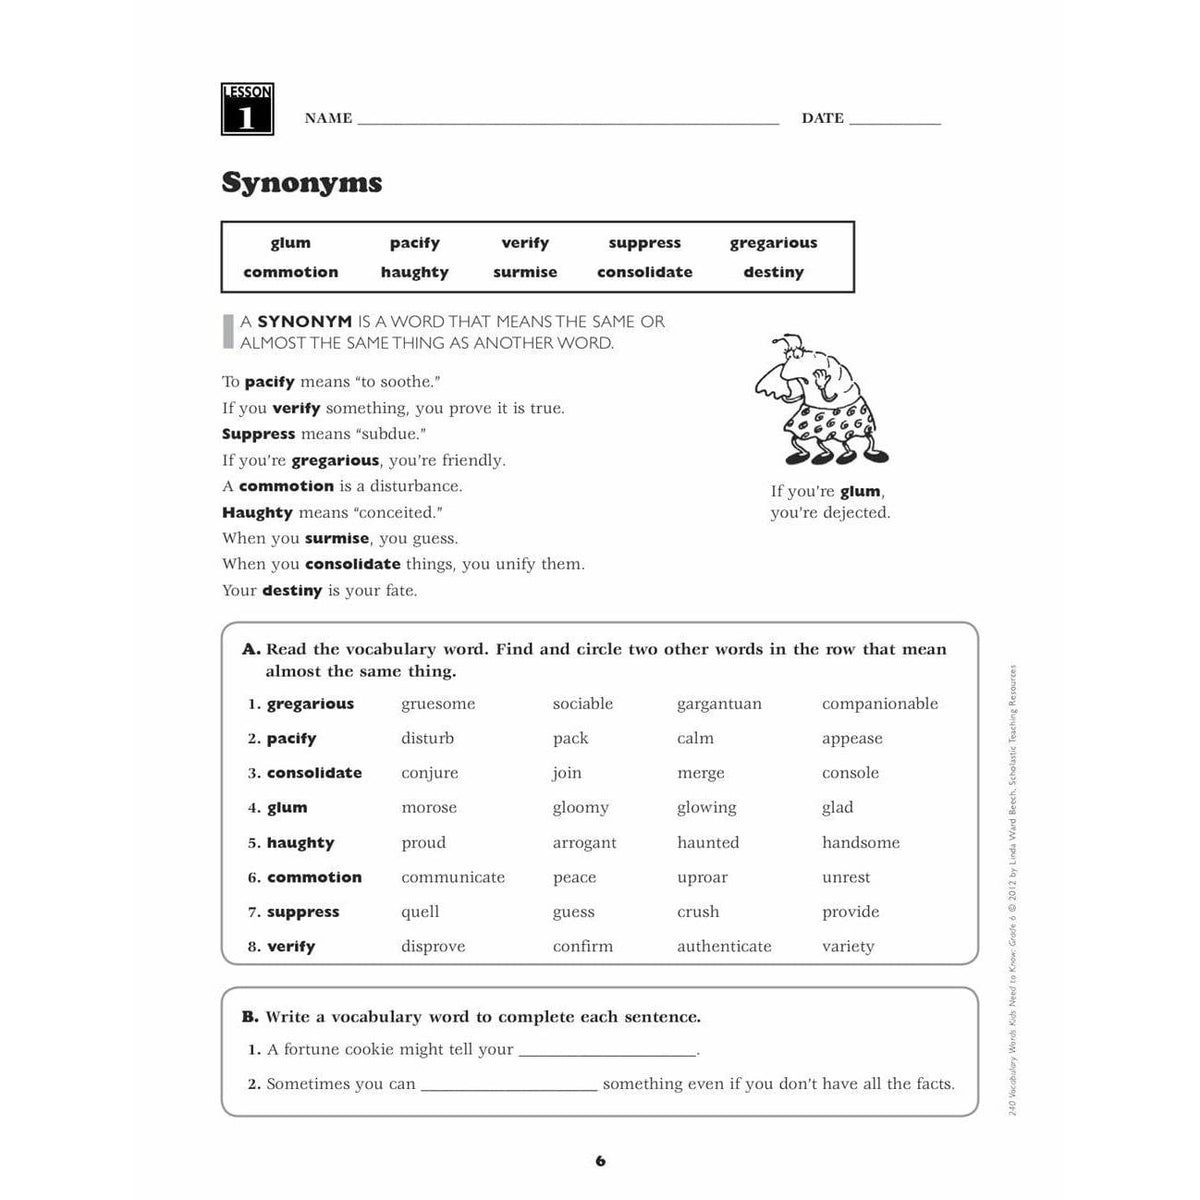 240 Vocabulary Words Kids Need to Know: Grade 6 - MakoStars Online Store